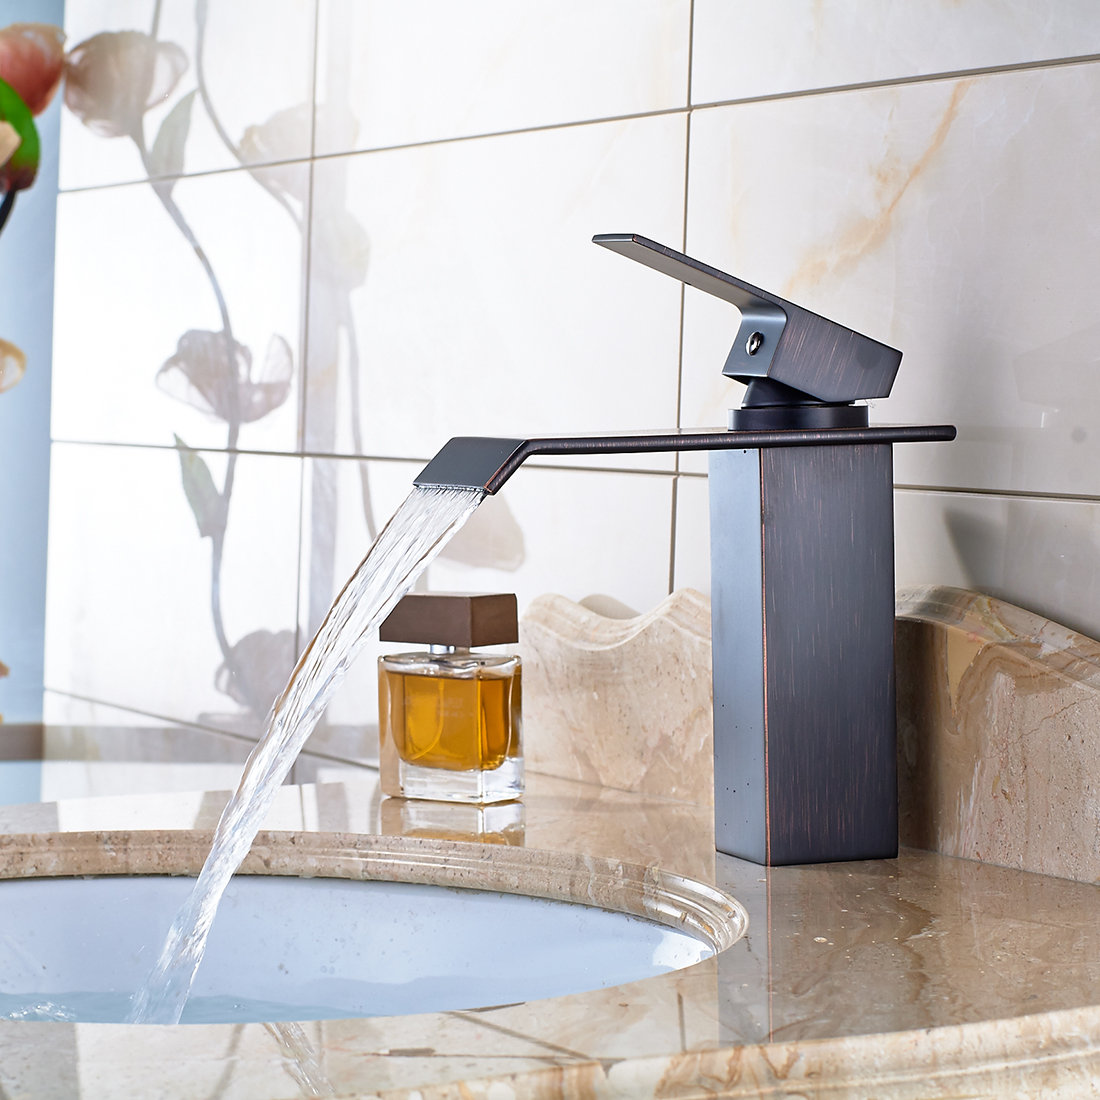 Luxe SUS 304 lavabo salle de bain robinet noir mat cascade robinet évier mitigeur salle de bain évier robinet